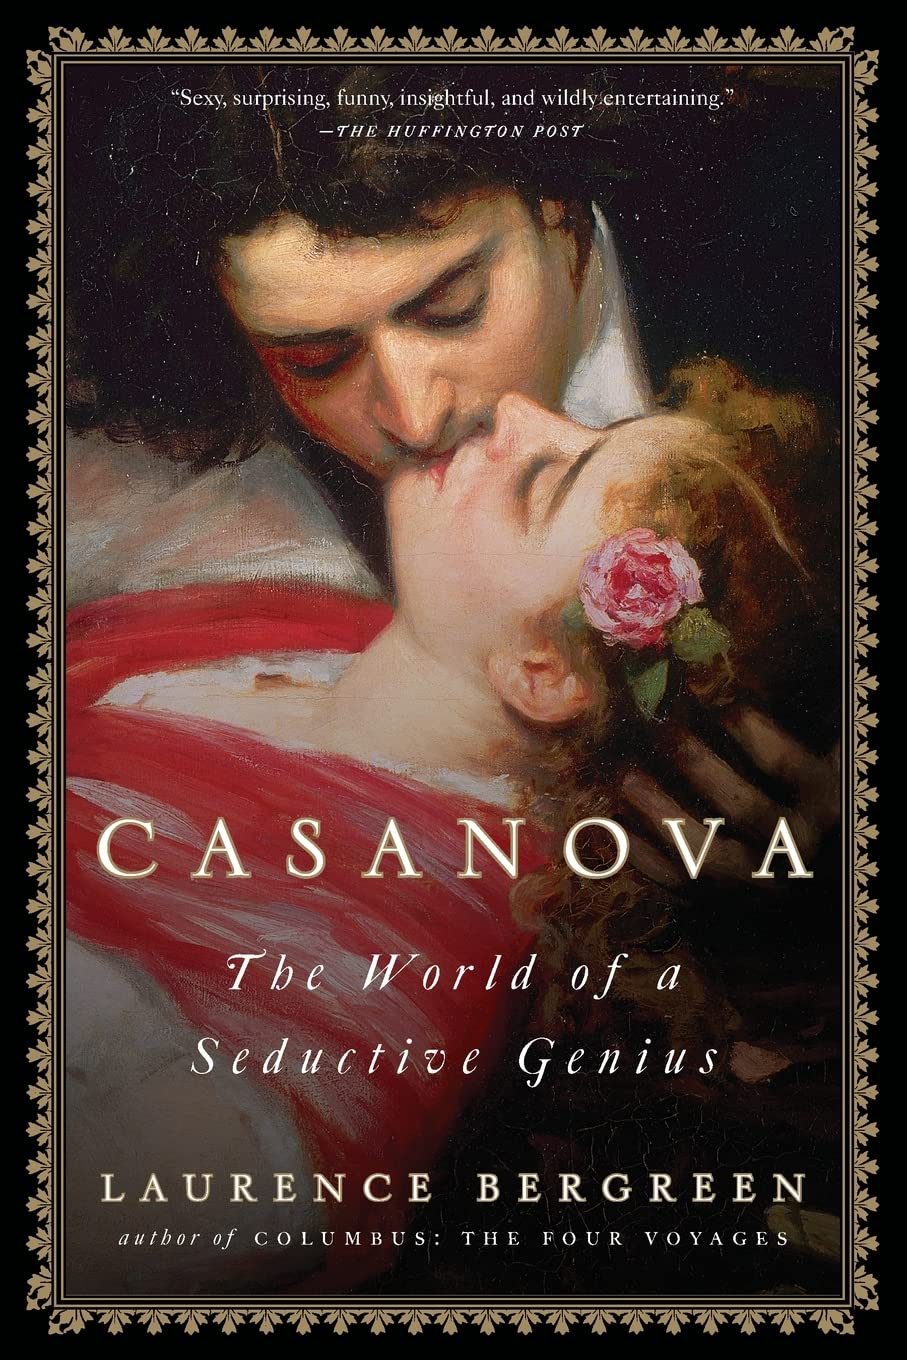 Casanova-The World of a Seductive Genius-Stumbit Books